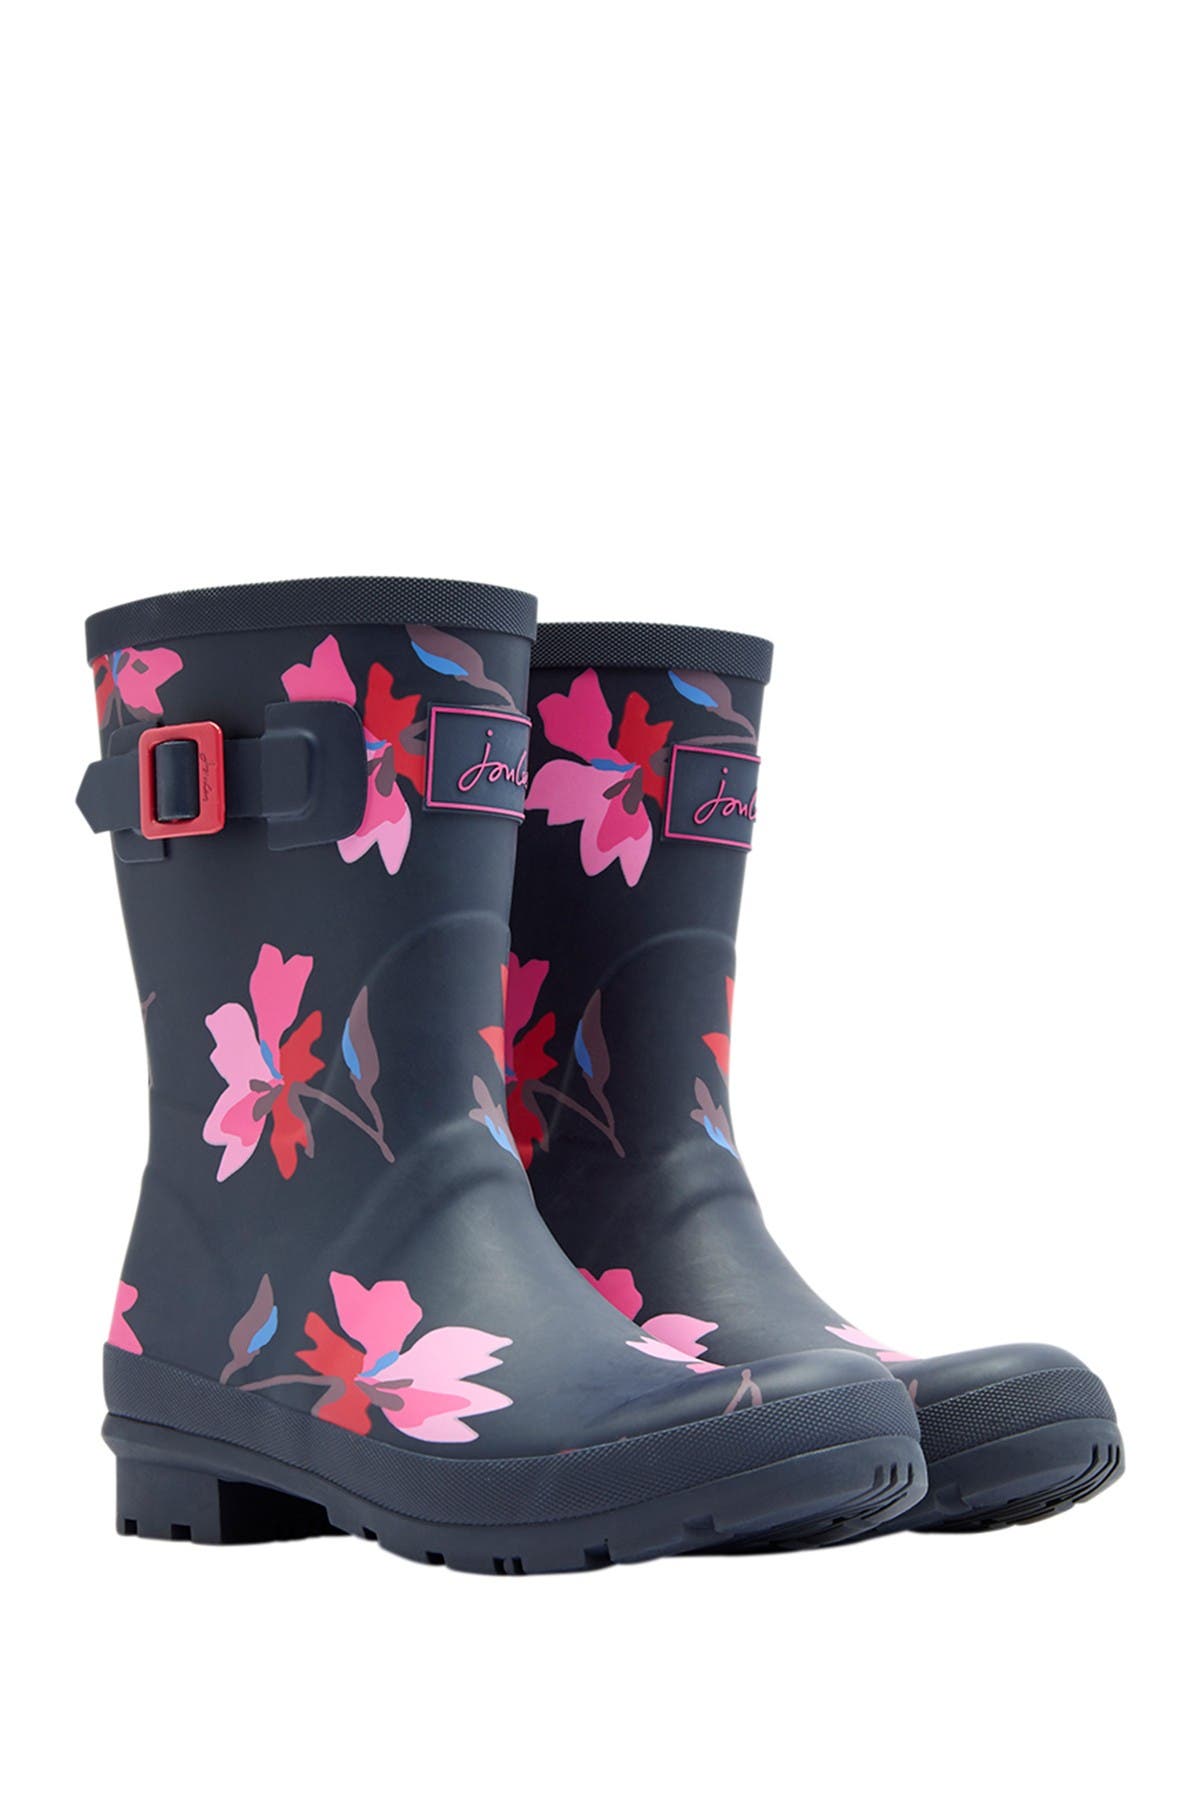 welly rain boots